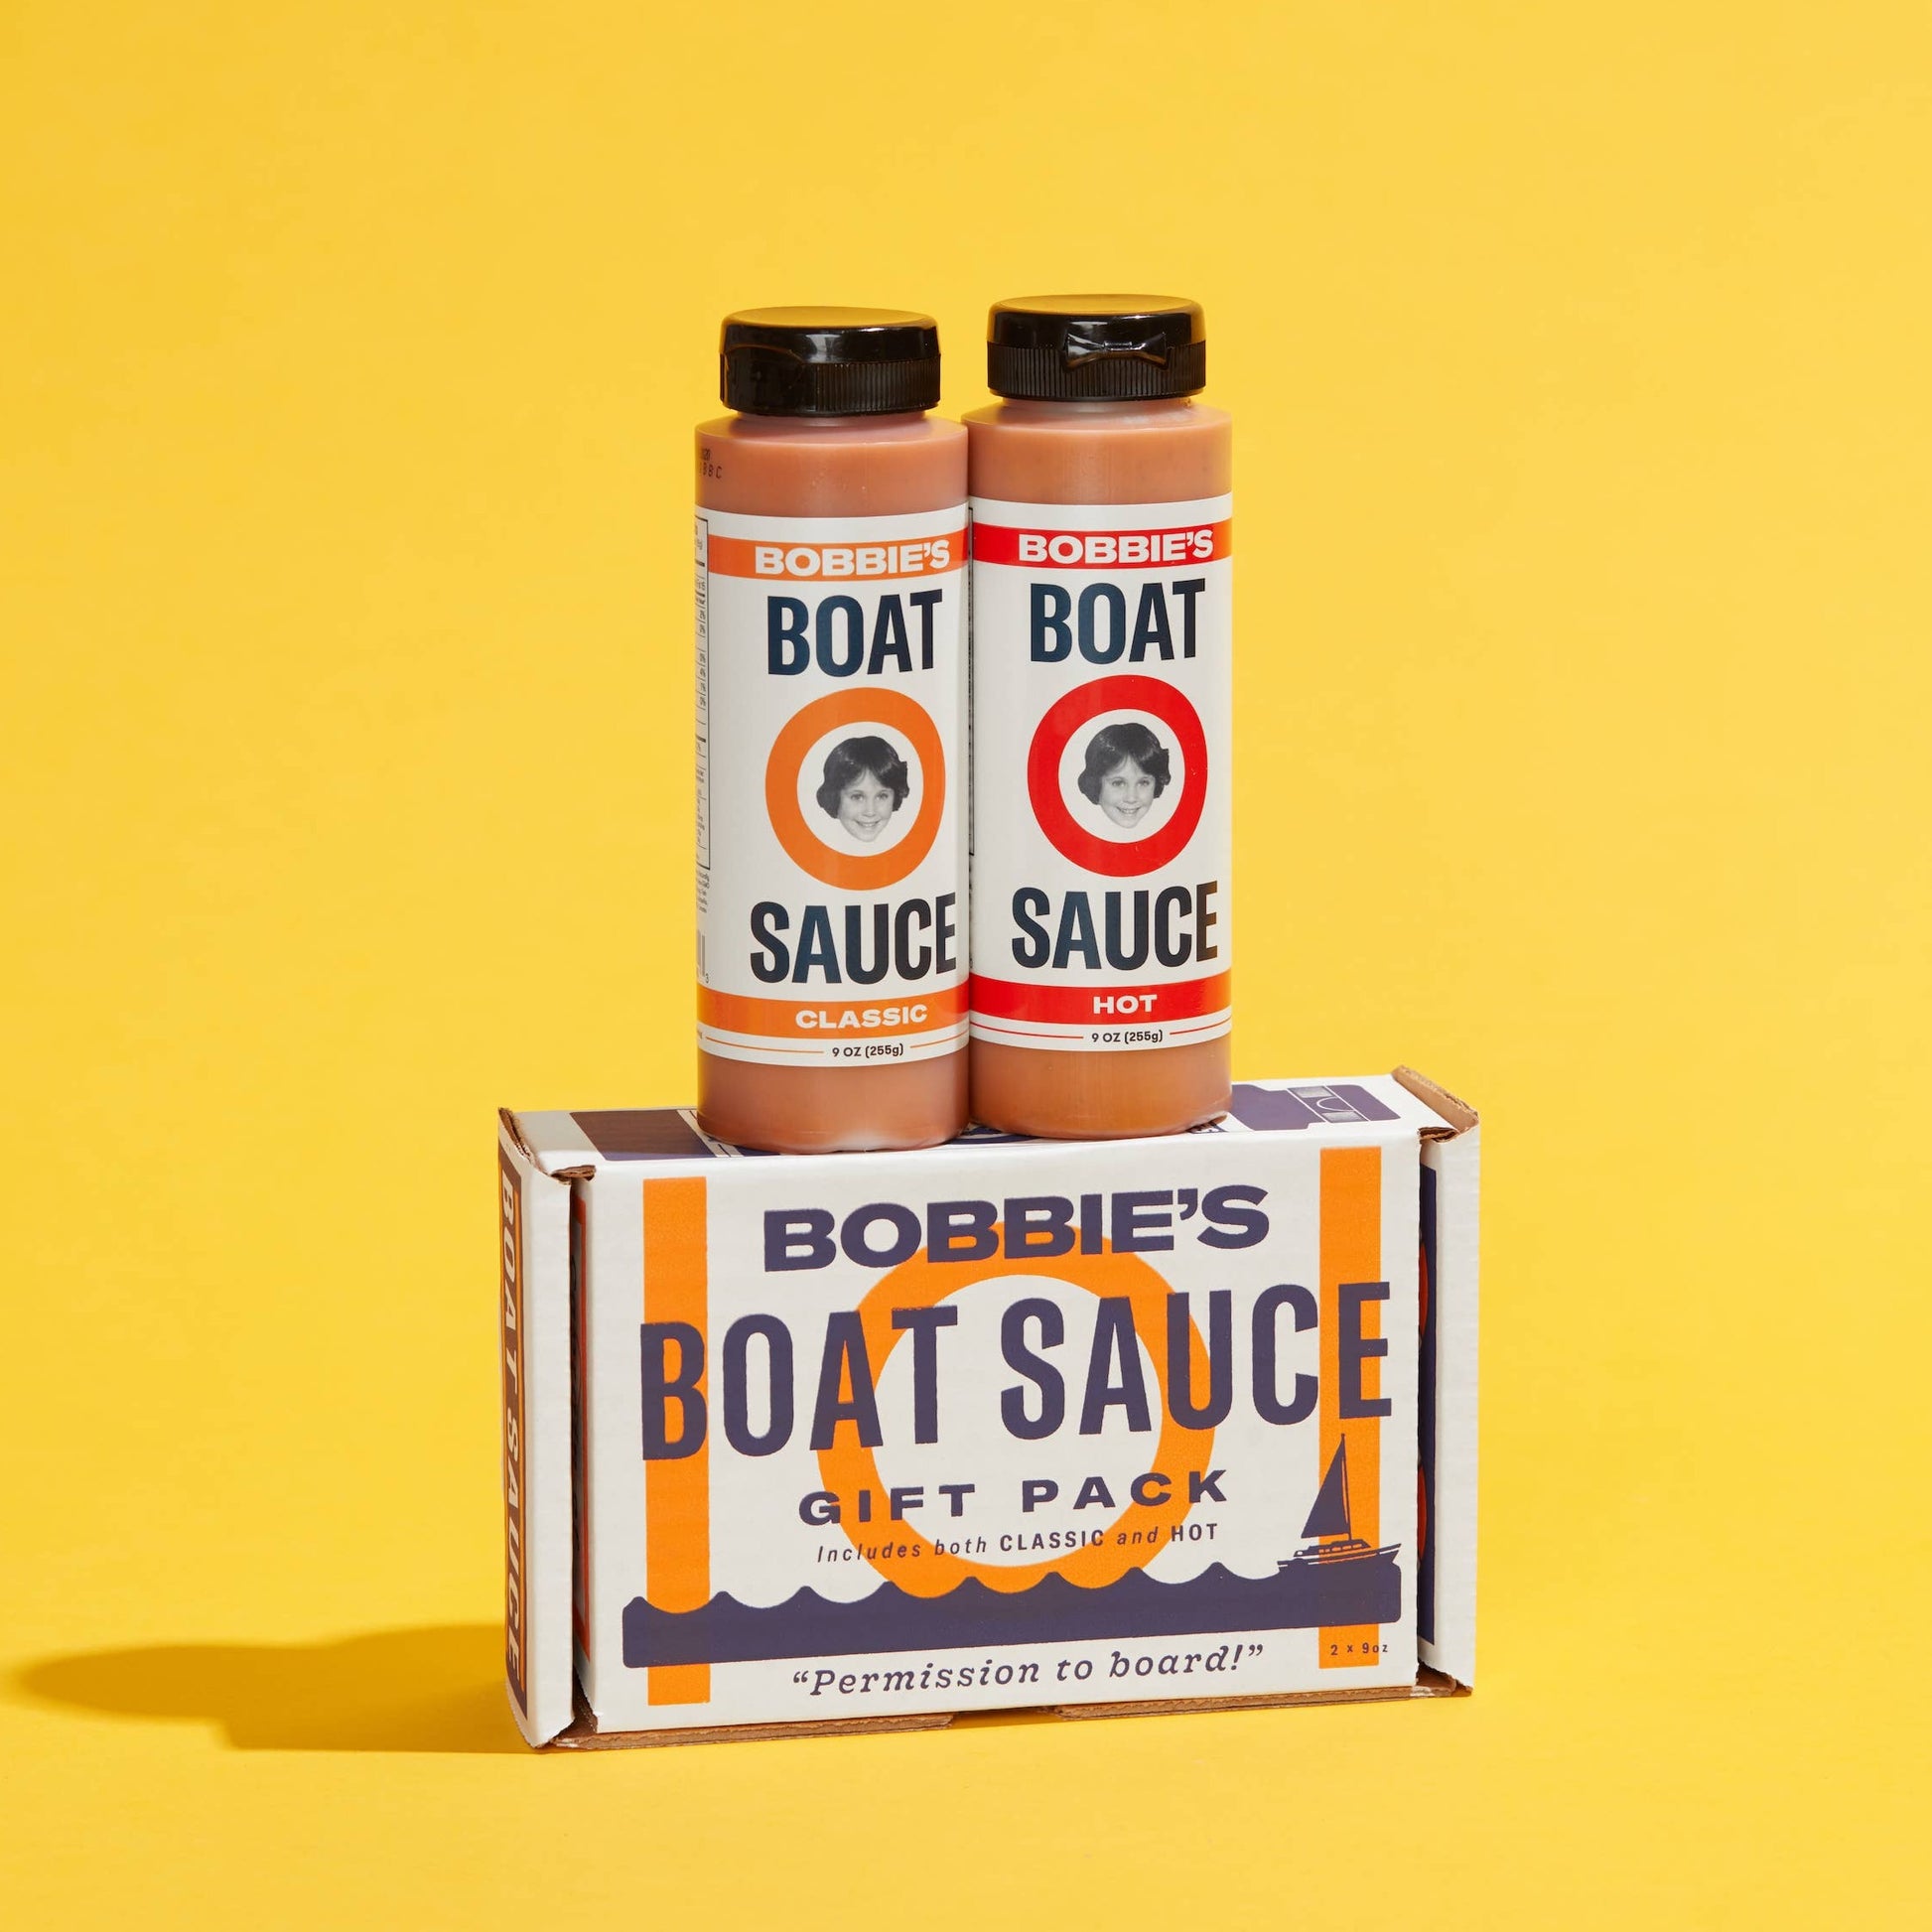 bobbies boat sauce gift pack